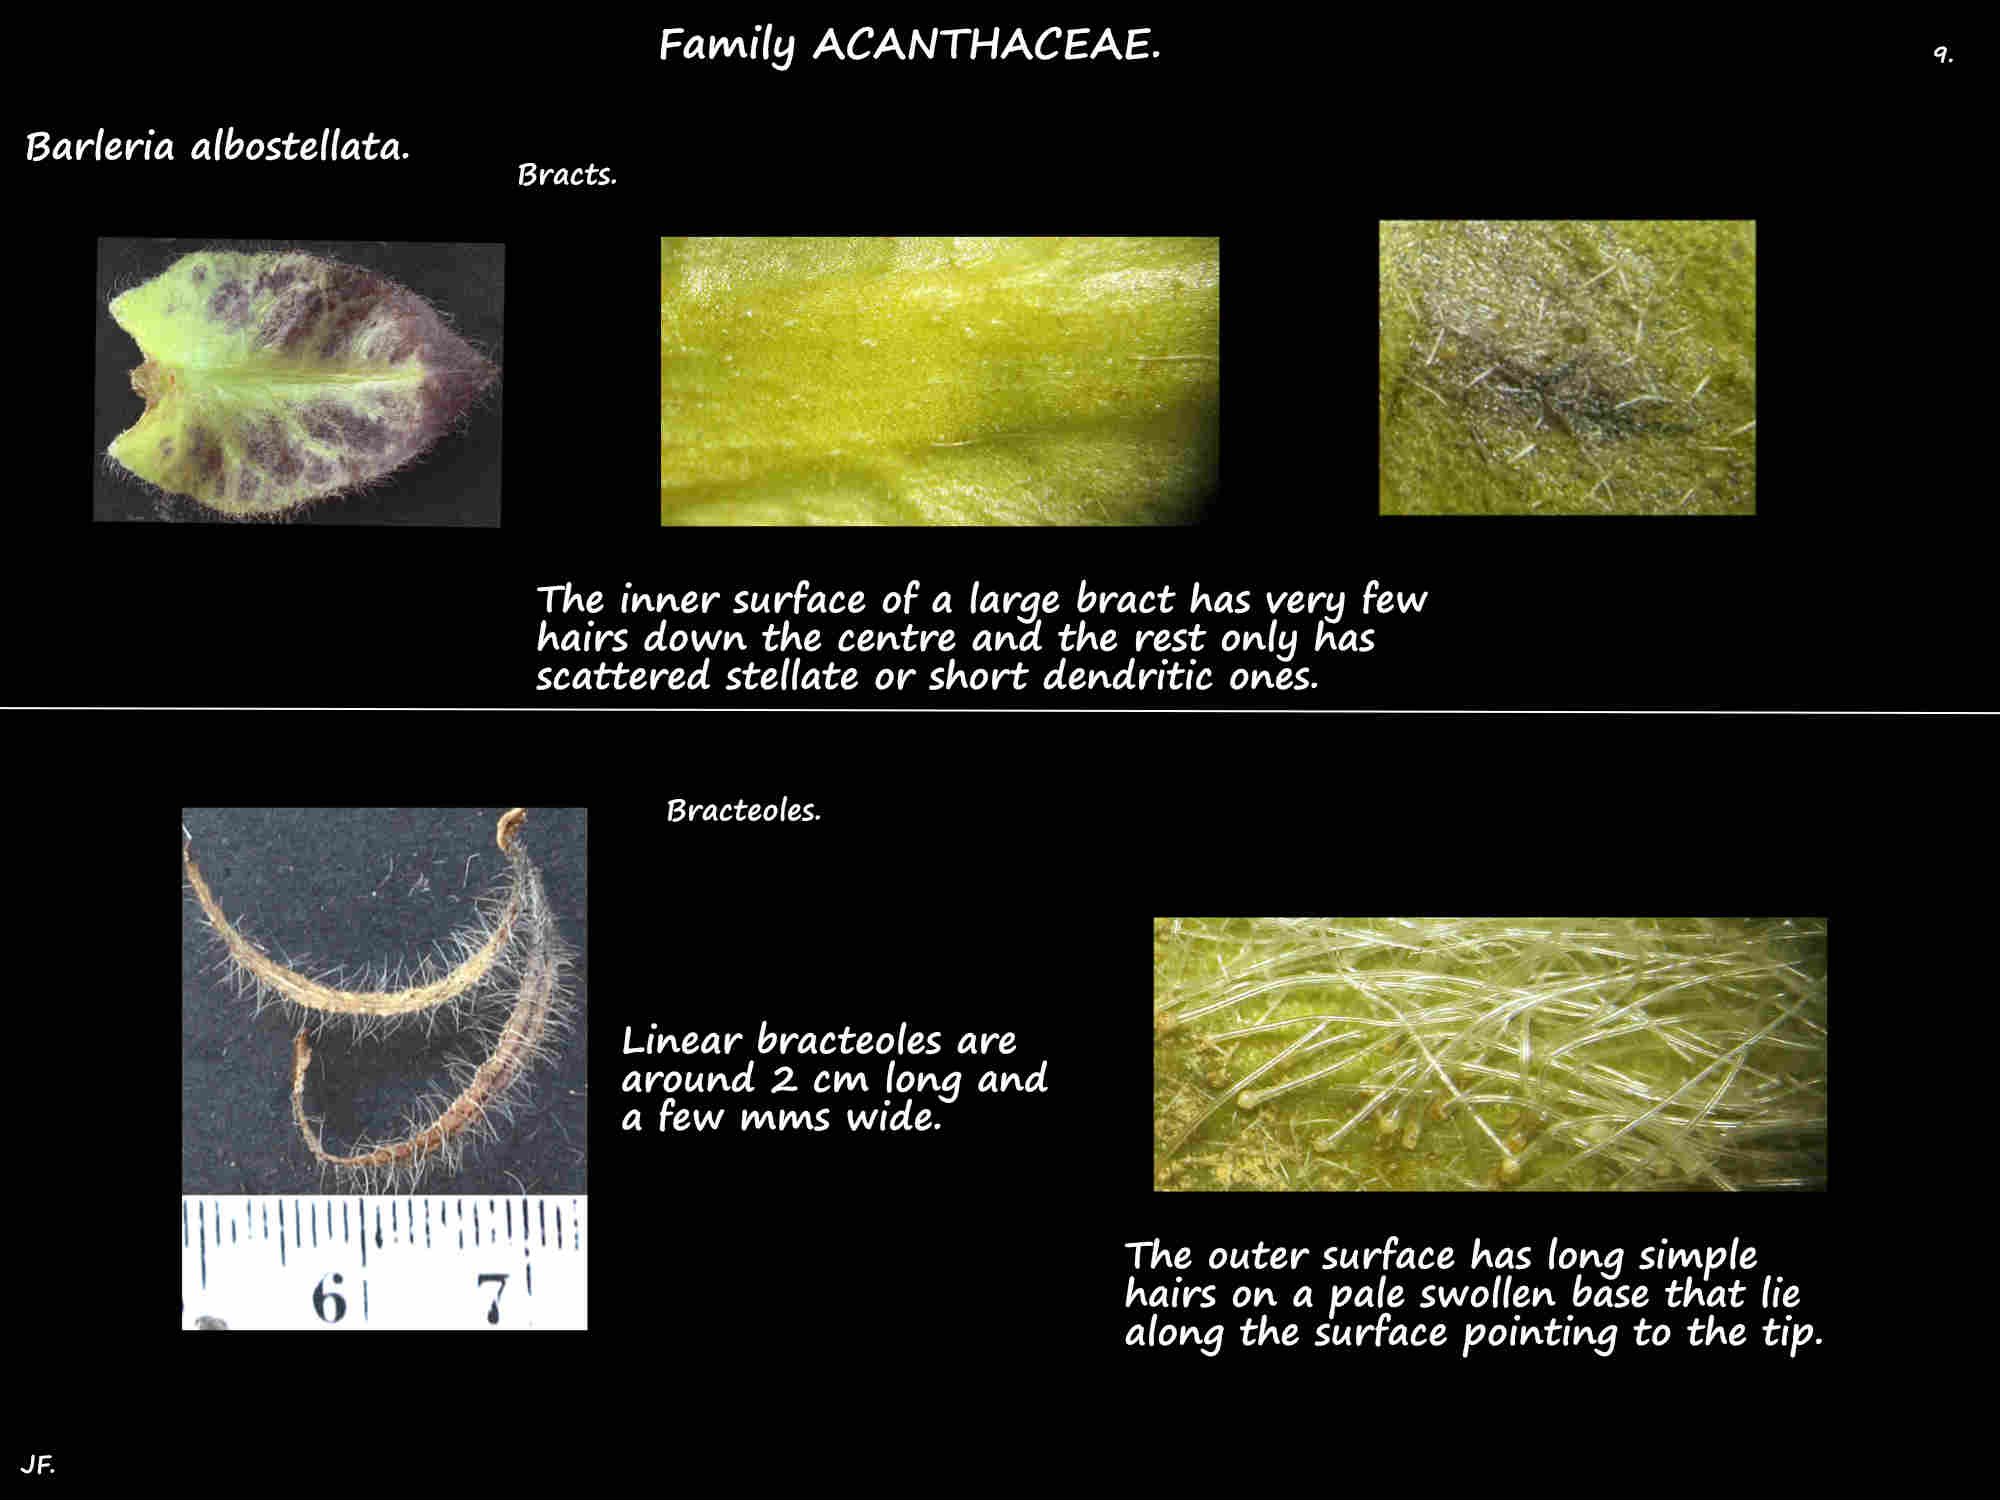 9 Hairs on Barleria albostellata bracteoles